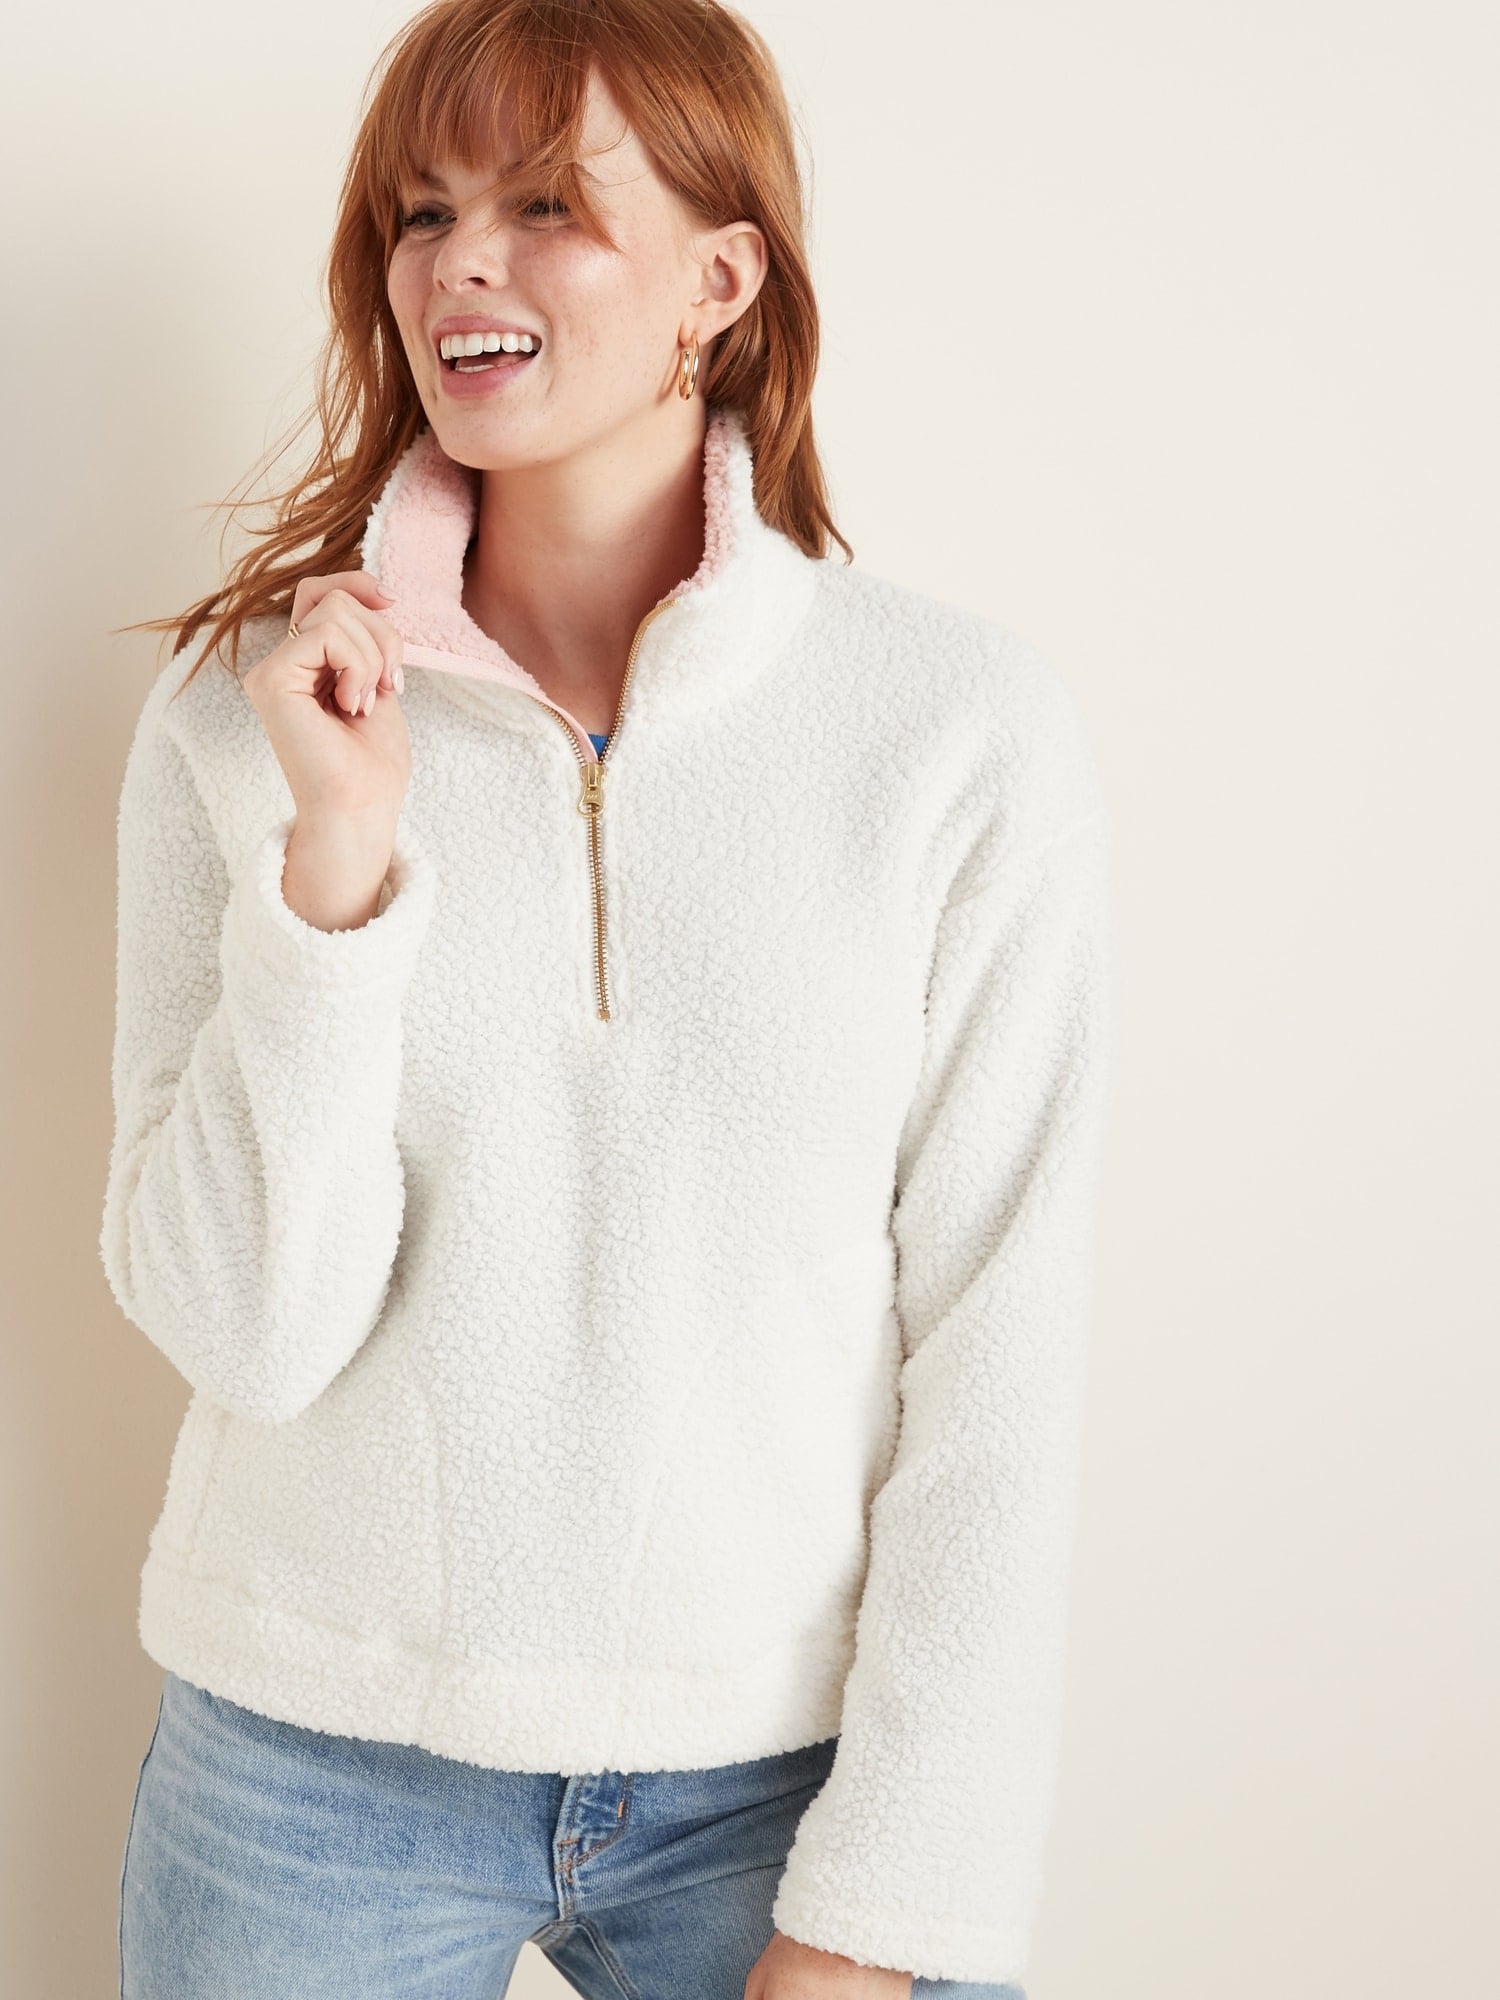 Plameil Womens Sherpa Sweater 1/4 Zip Up Pullover Fuzzy Fleece Long Sleeve Sweatshirt with Pocket Coat 